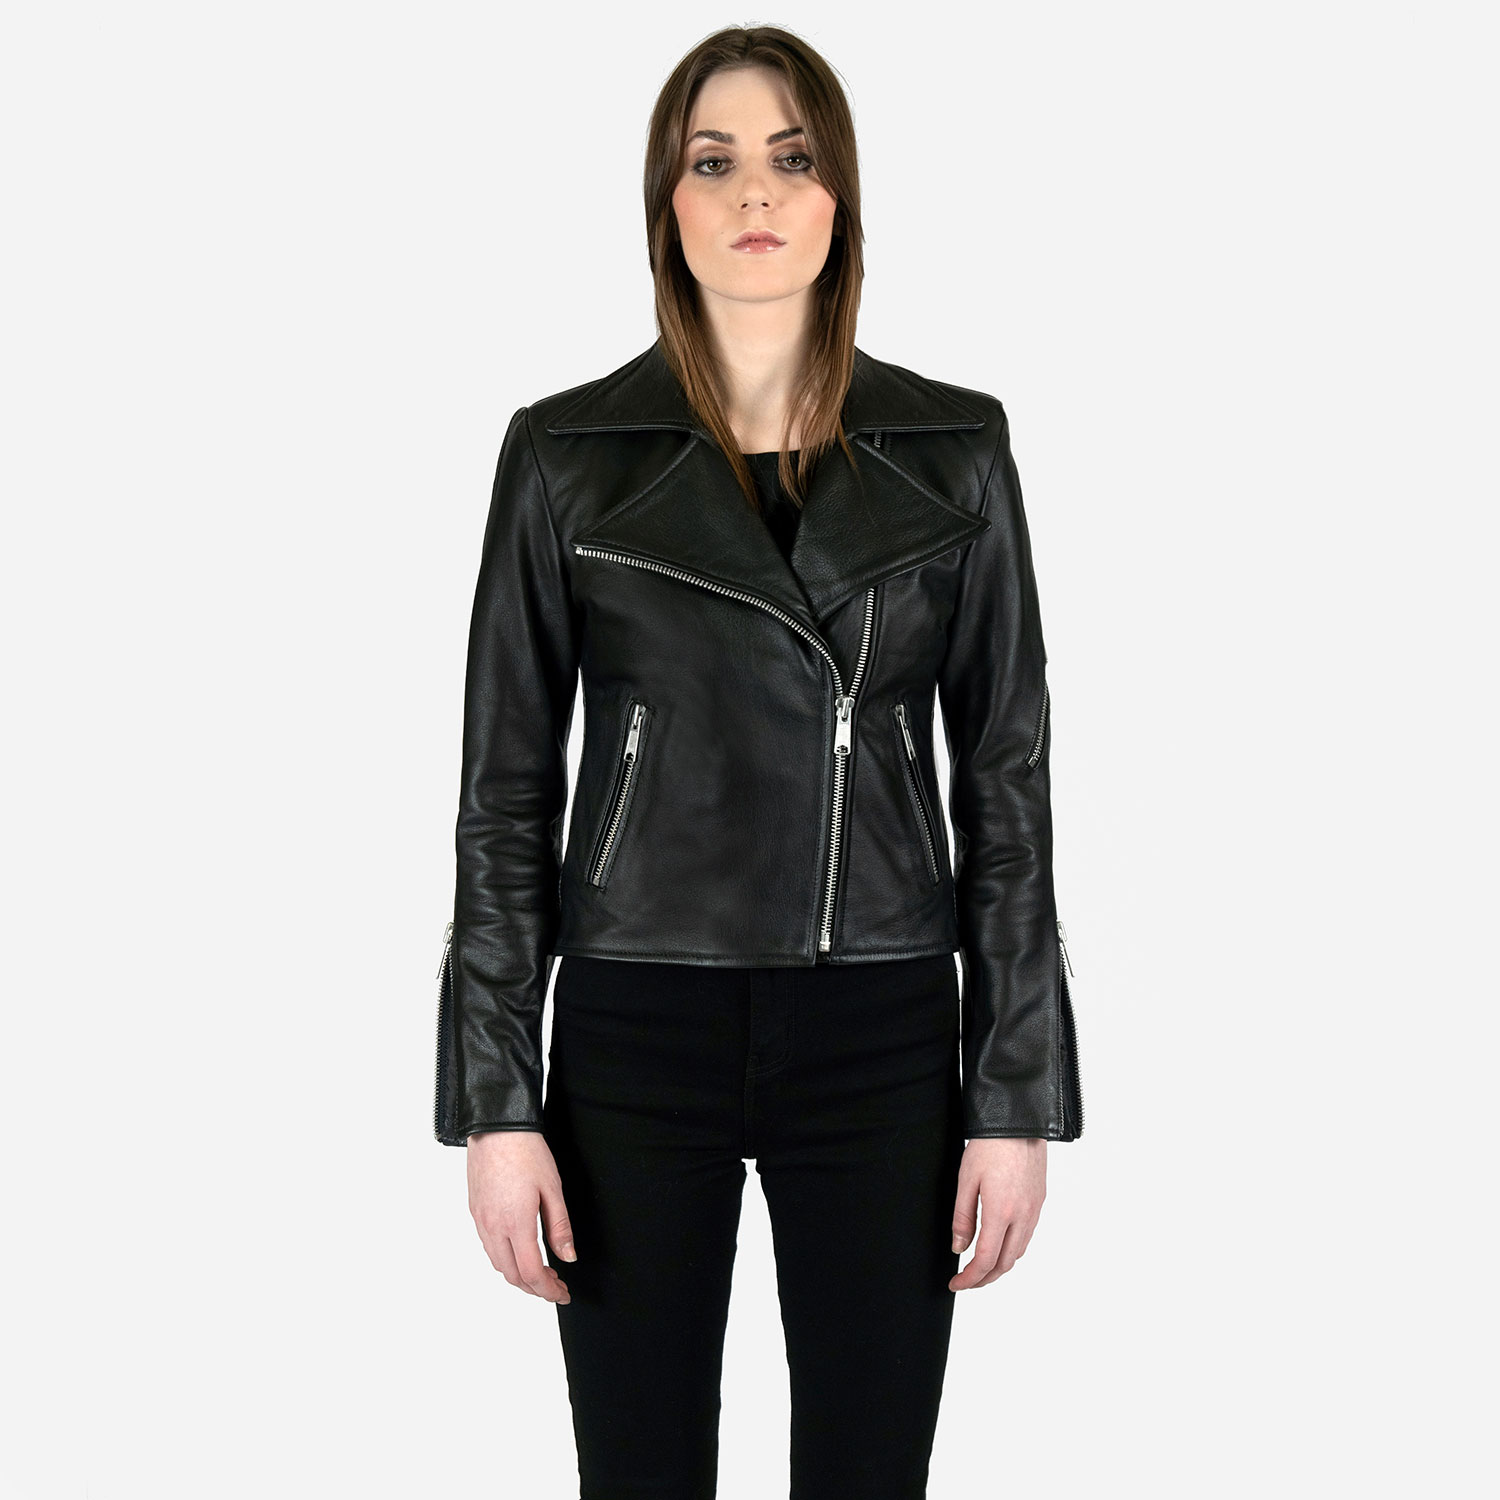 M, 4XL) XS, Flash (Size Hell Jacket | S, Leather Straight To XL, Apparel 3XL, L, 2XL, -